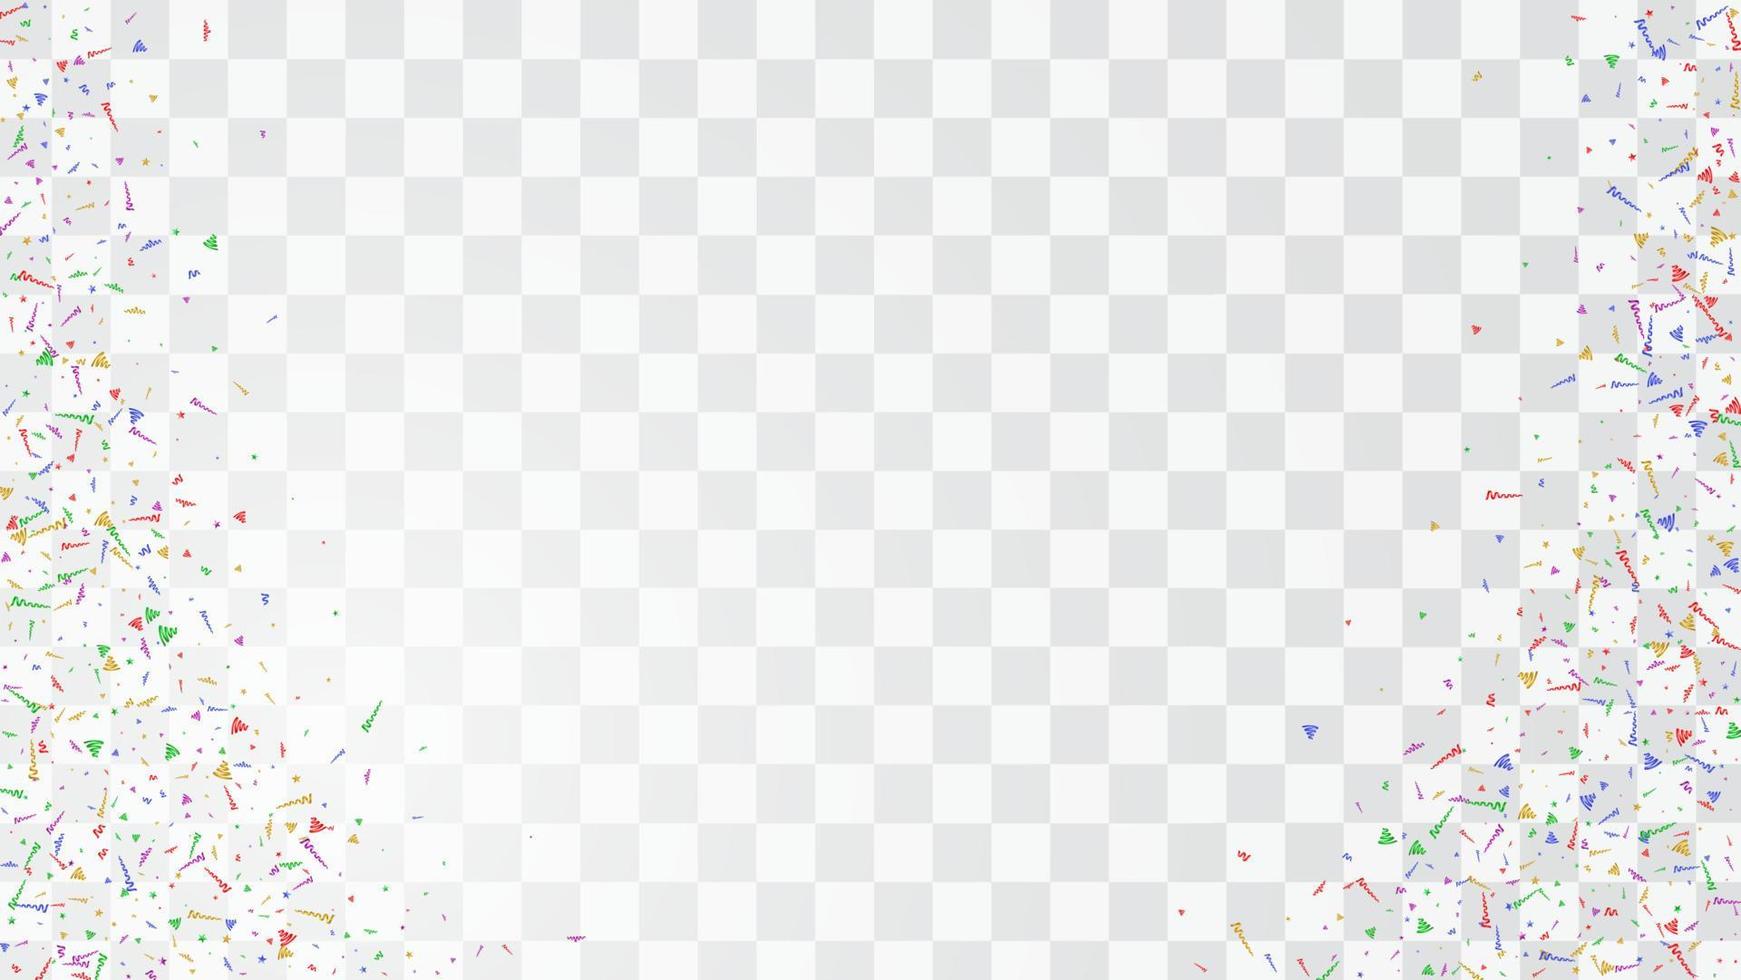 abstrato colorido de confete voador. Isolado no fundo branco. vetor